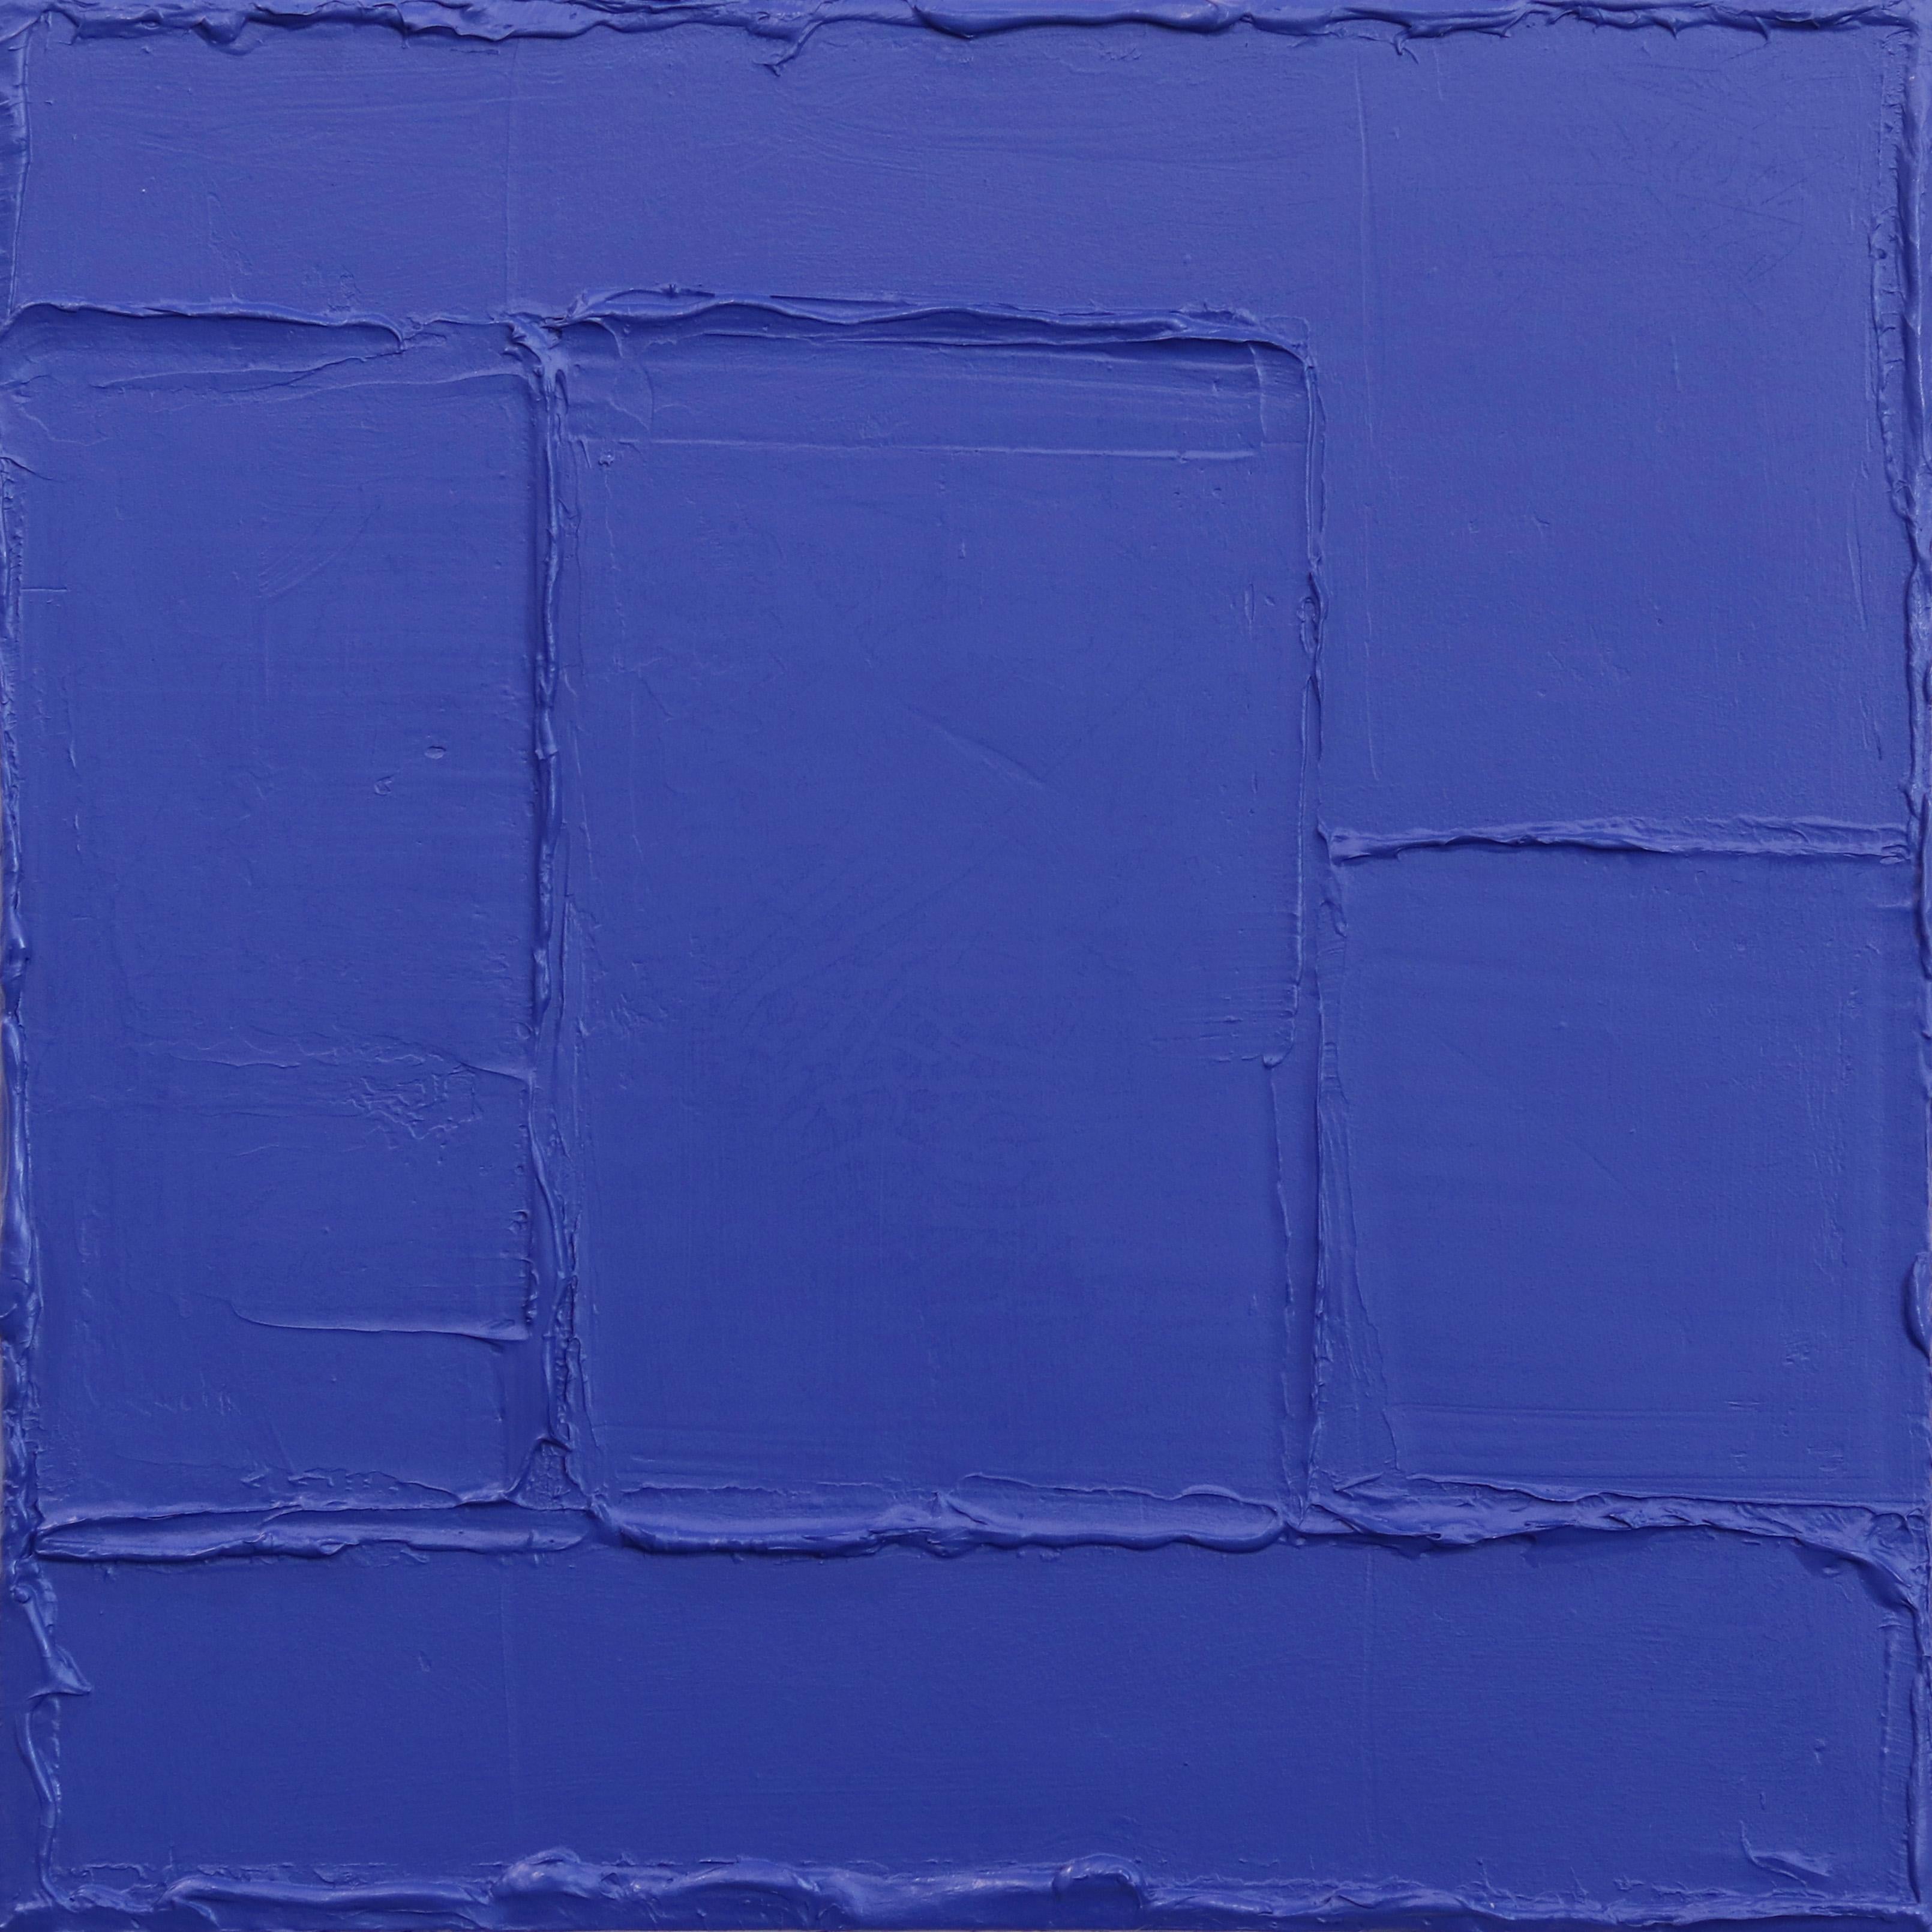 Sapphire - Blue Textural Abstract Minimalist Artwork on Canvas - Mixed Media Art by Len Klikunas